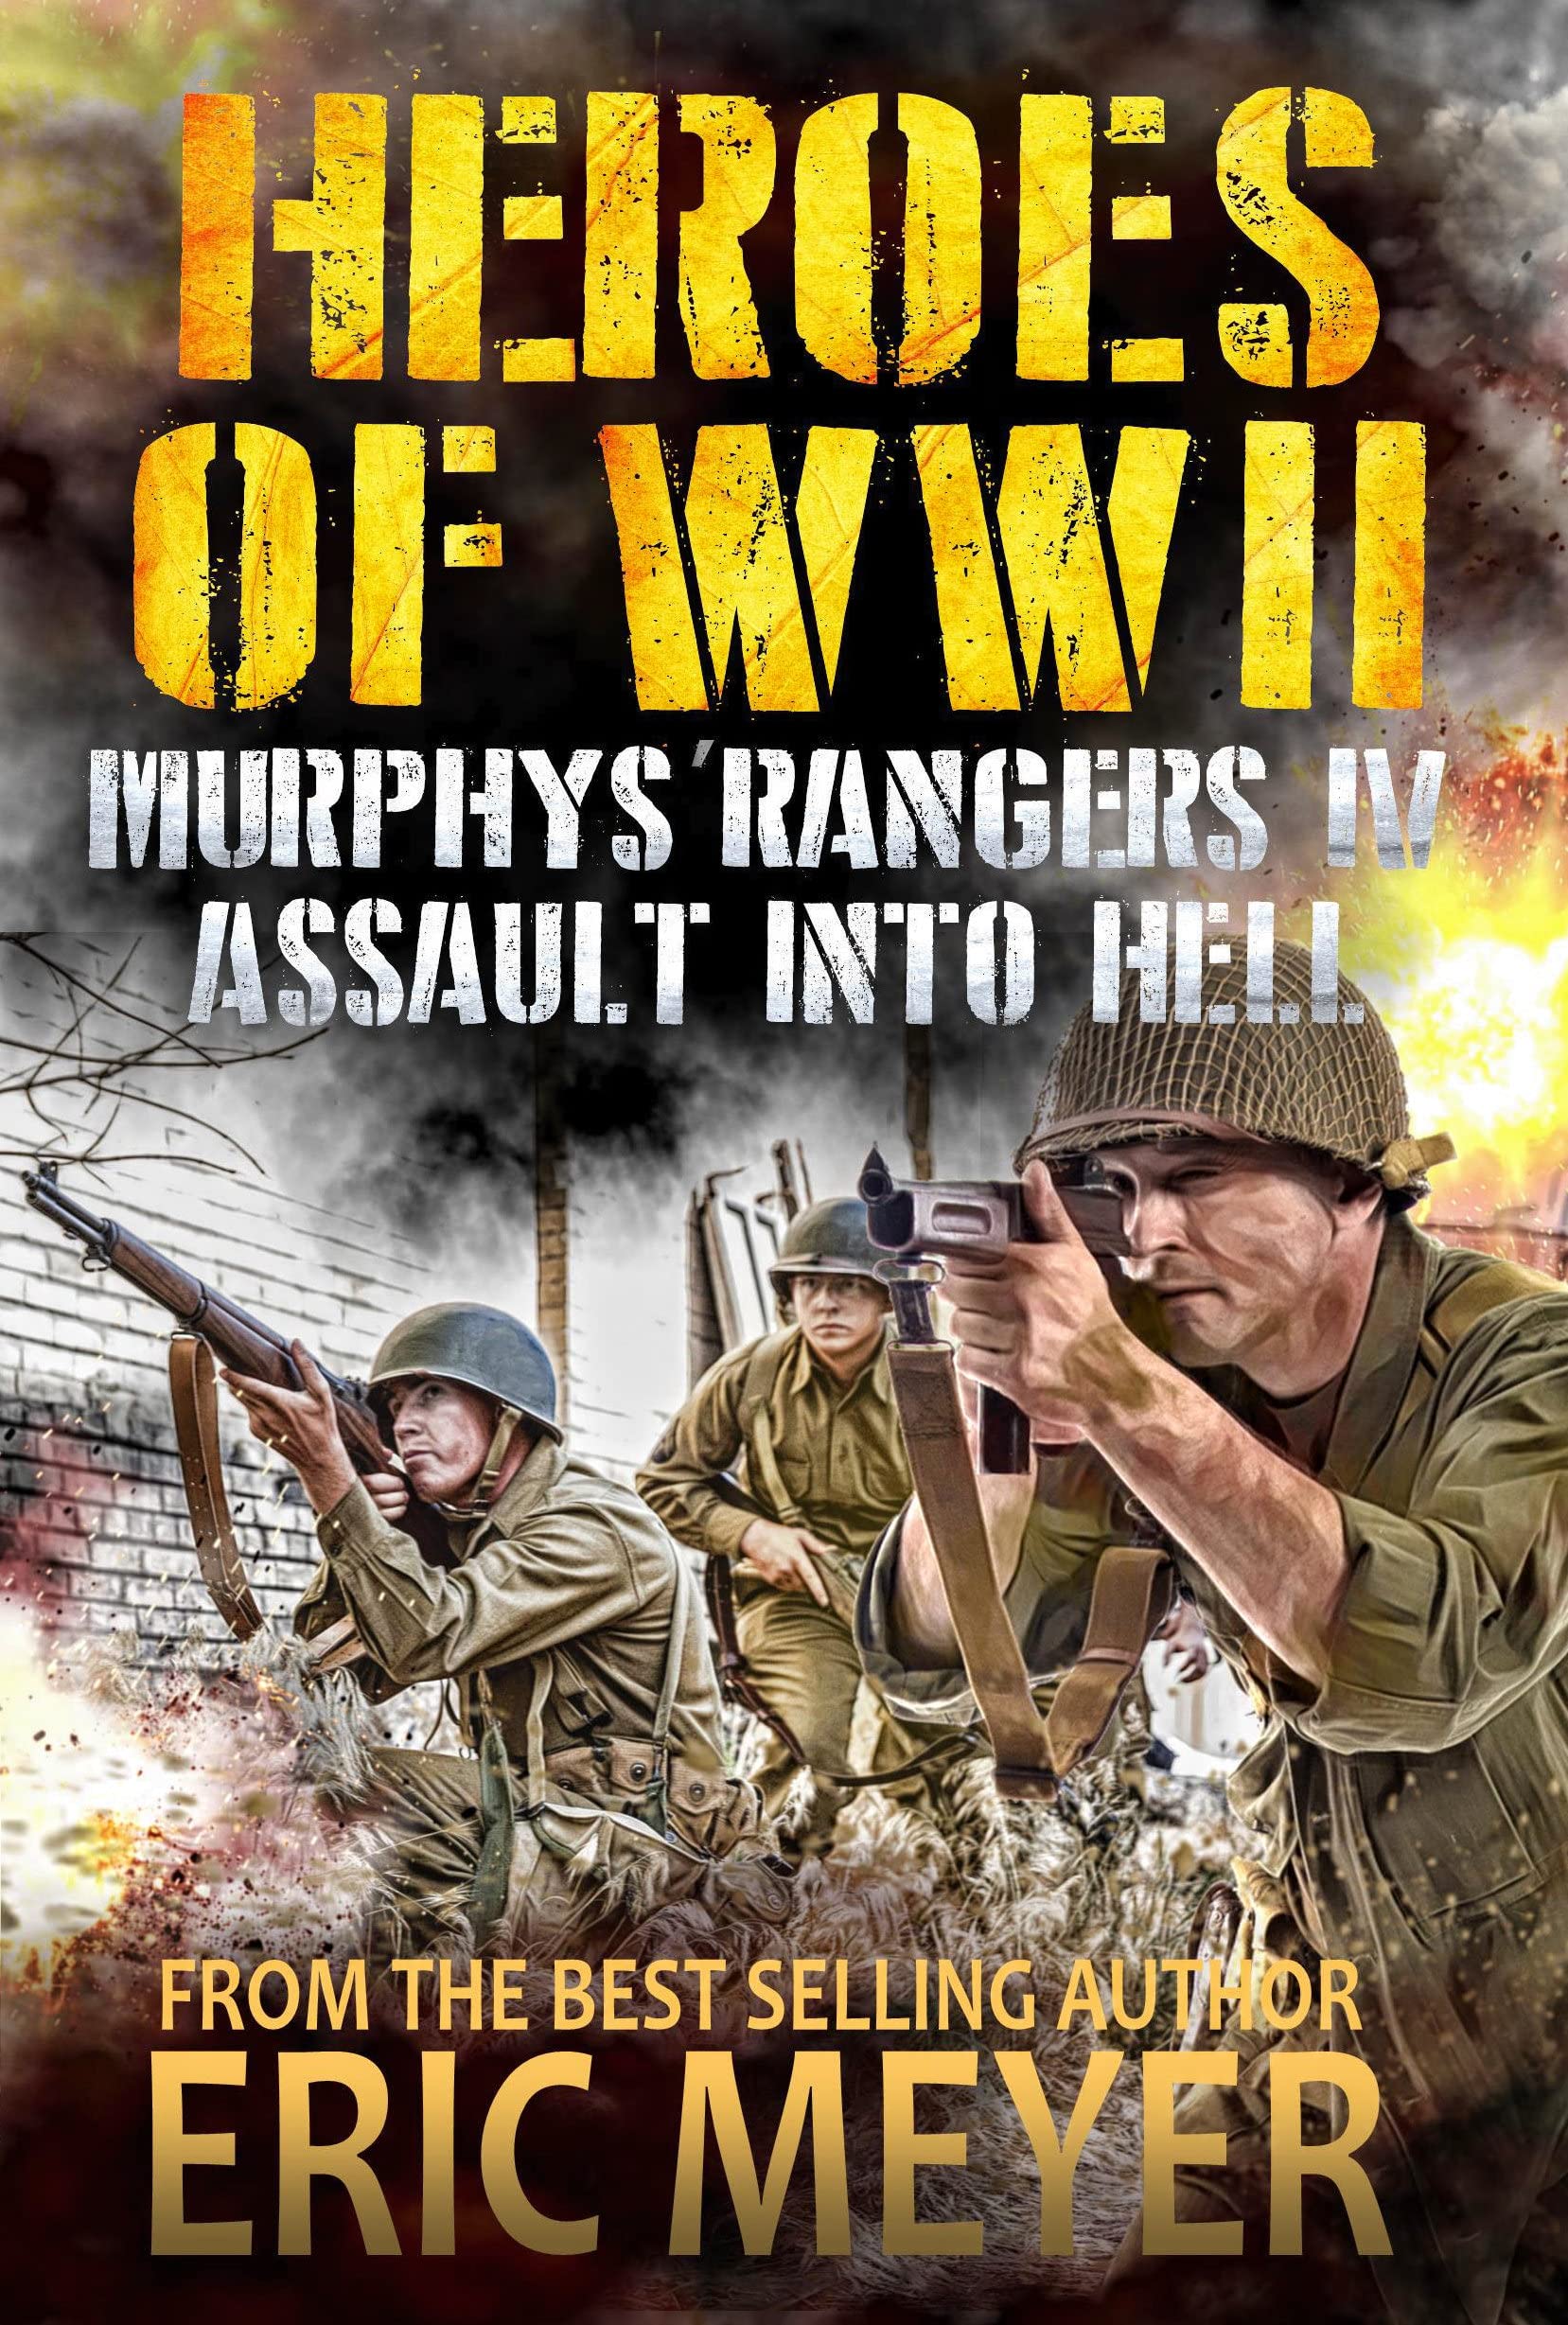 Heroes of World War II: Murphy's Rangers IV